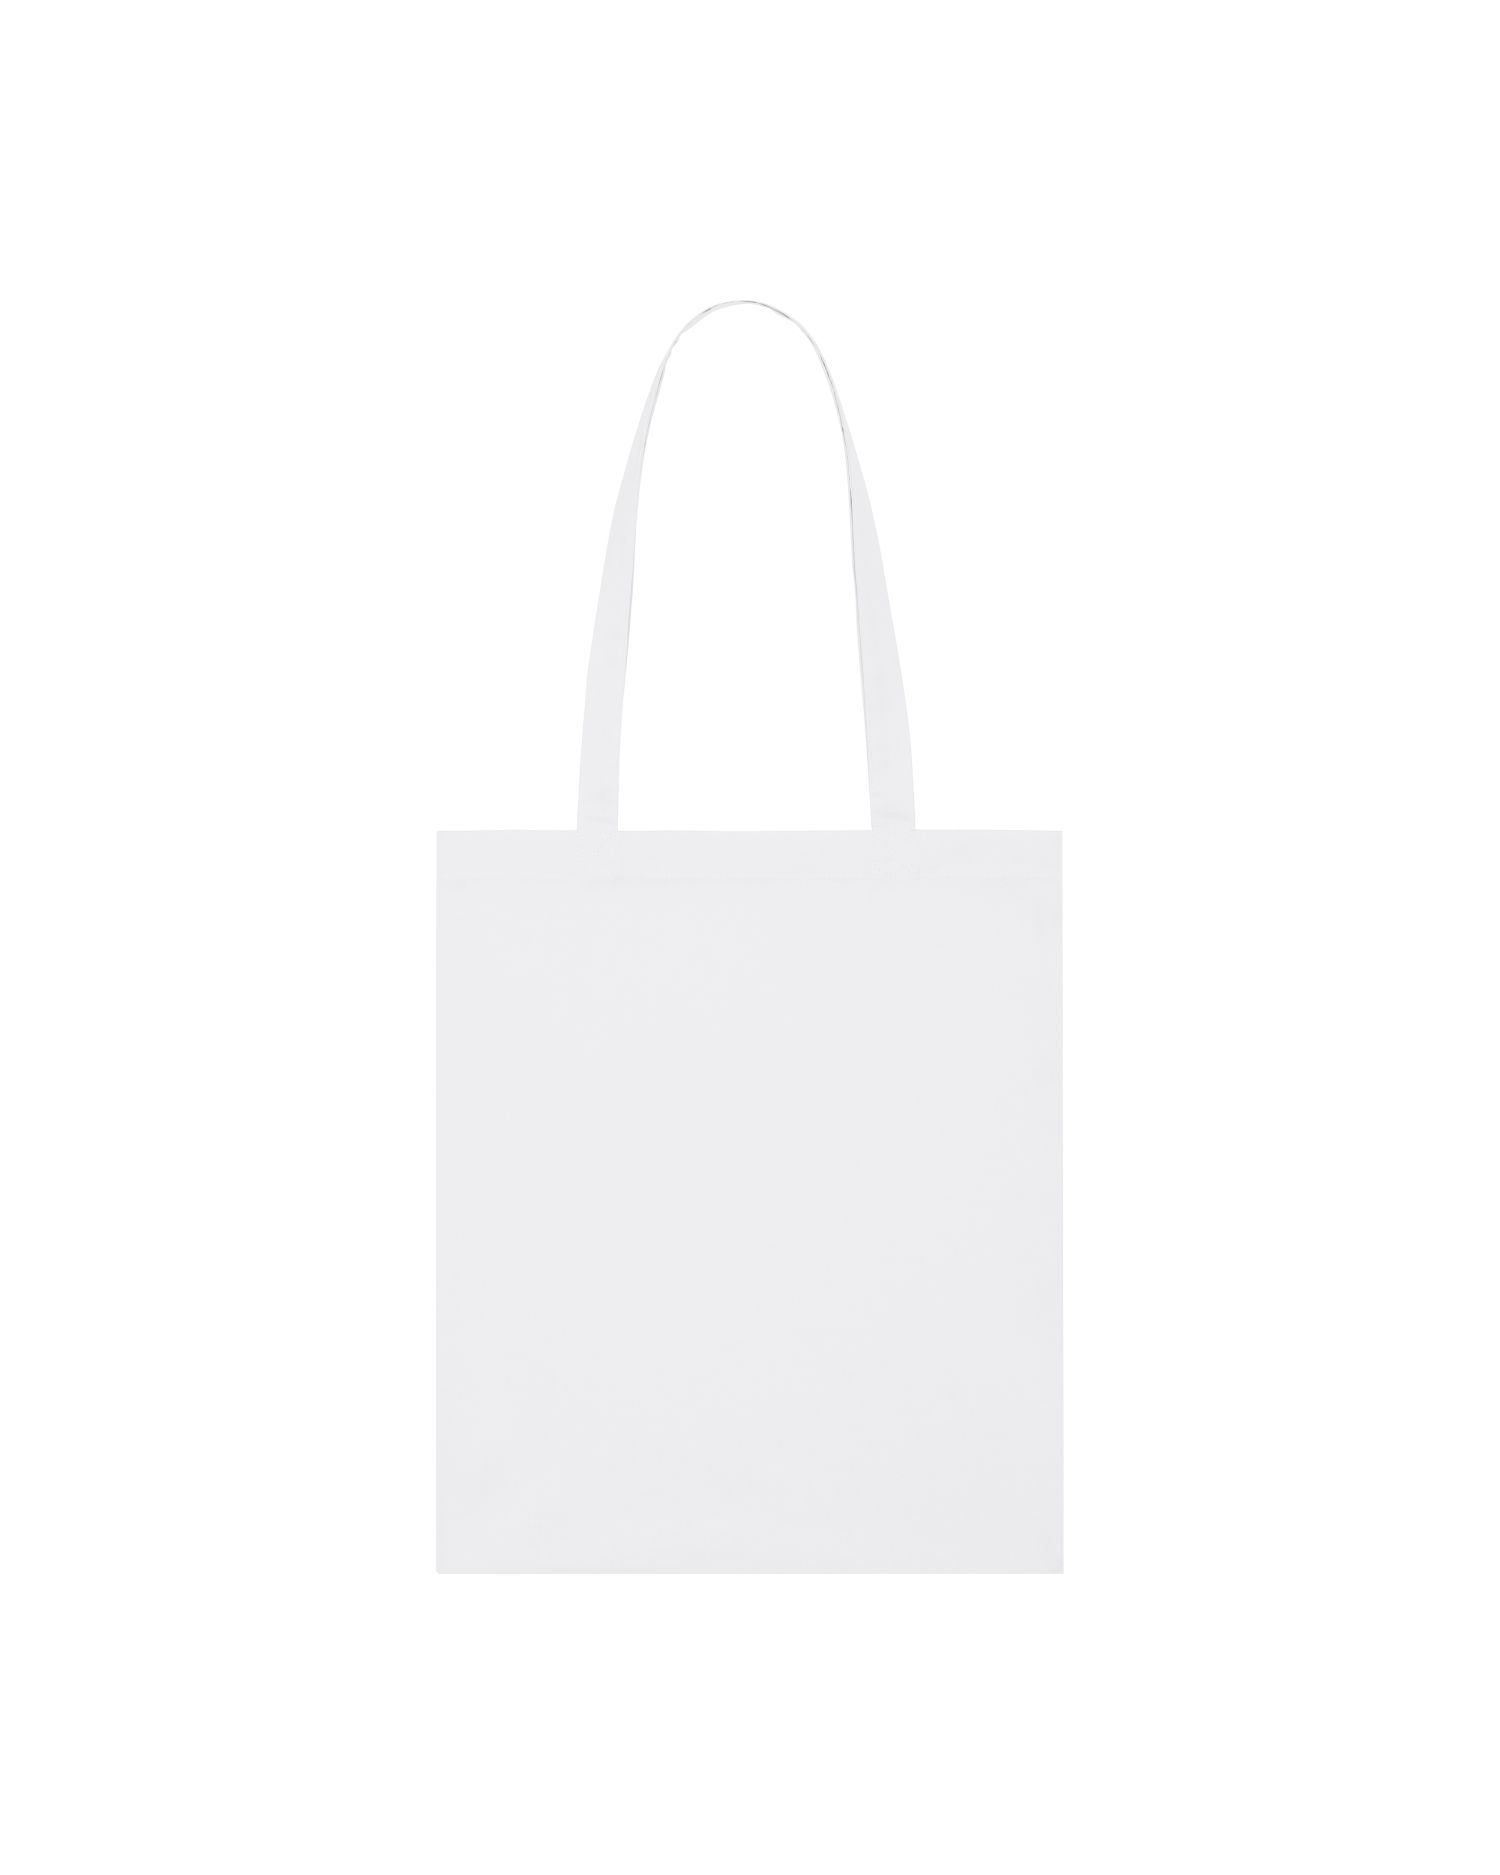  Light Tote Bag in Farbe White